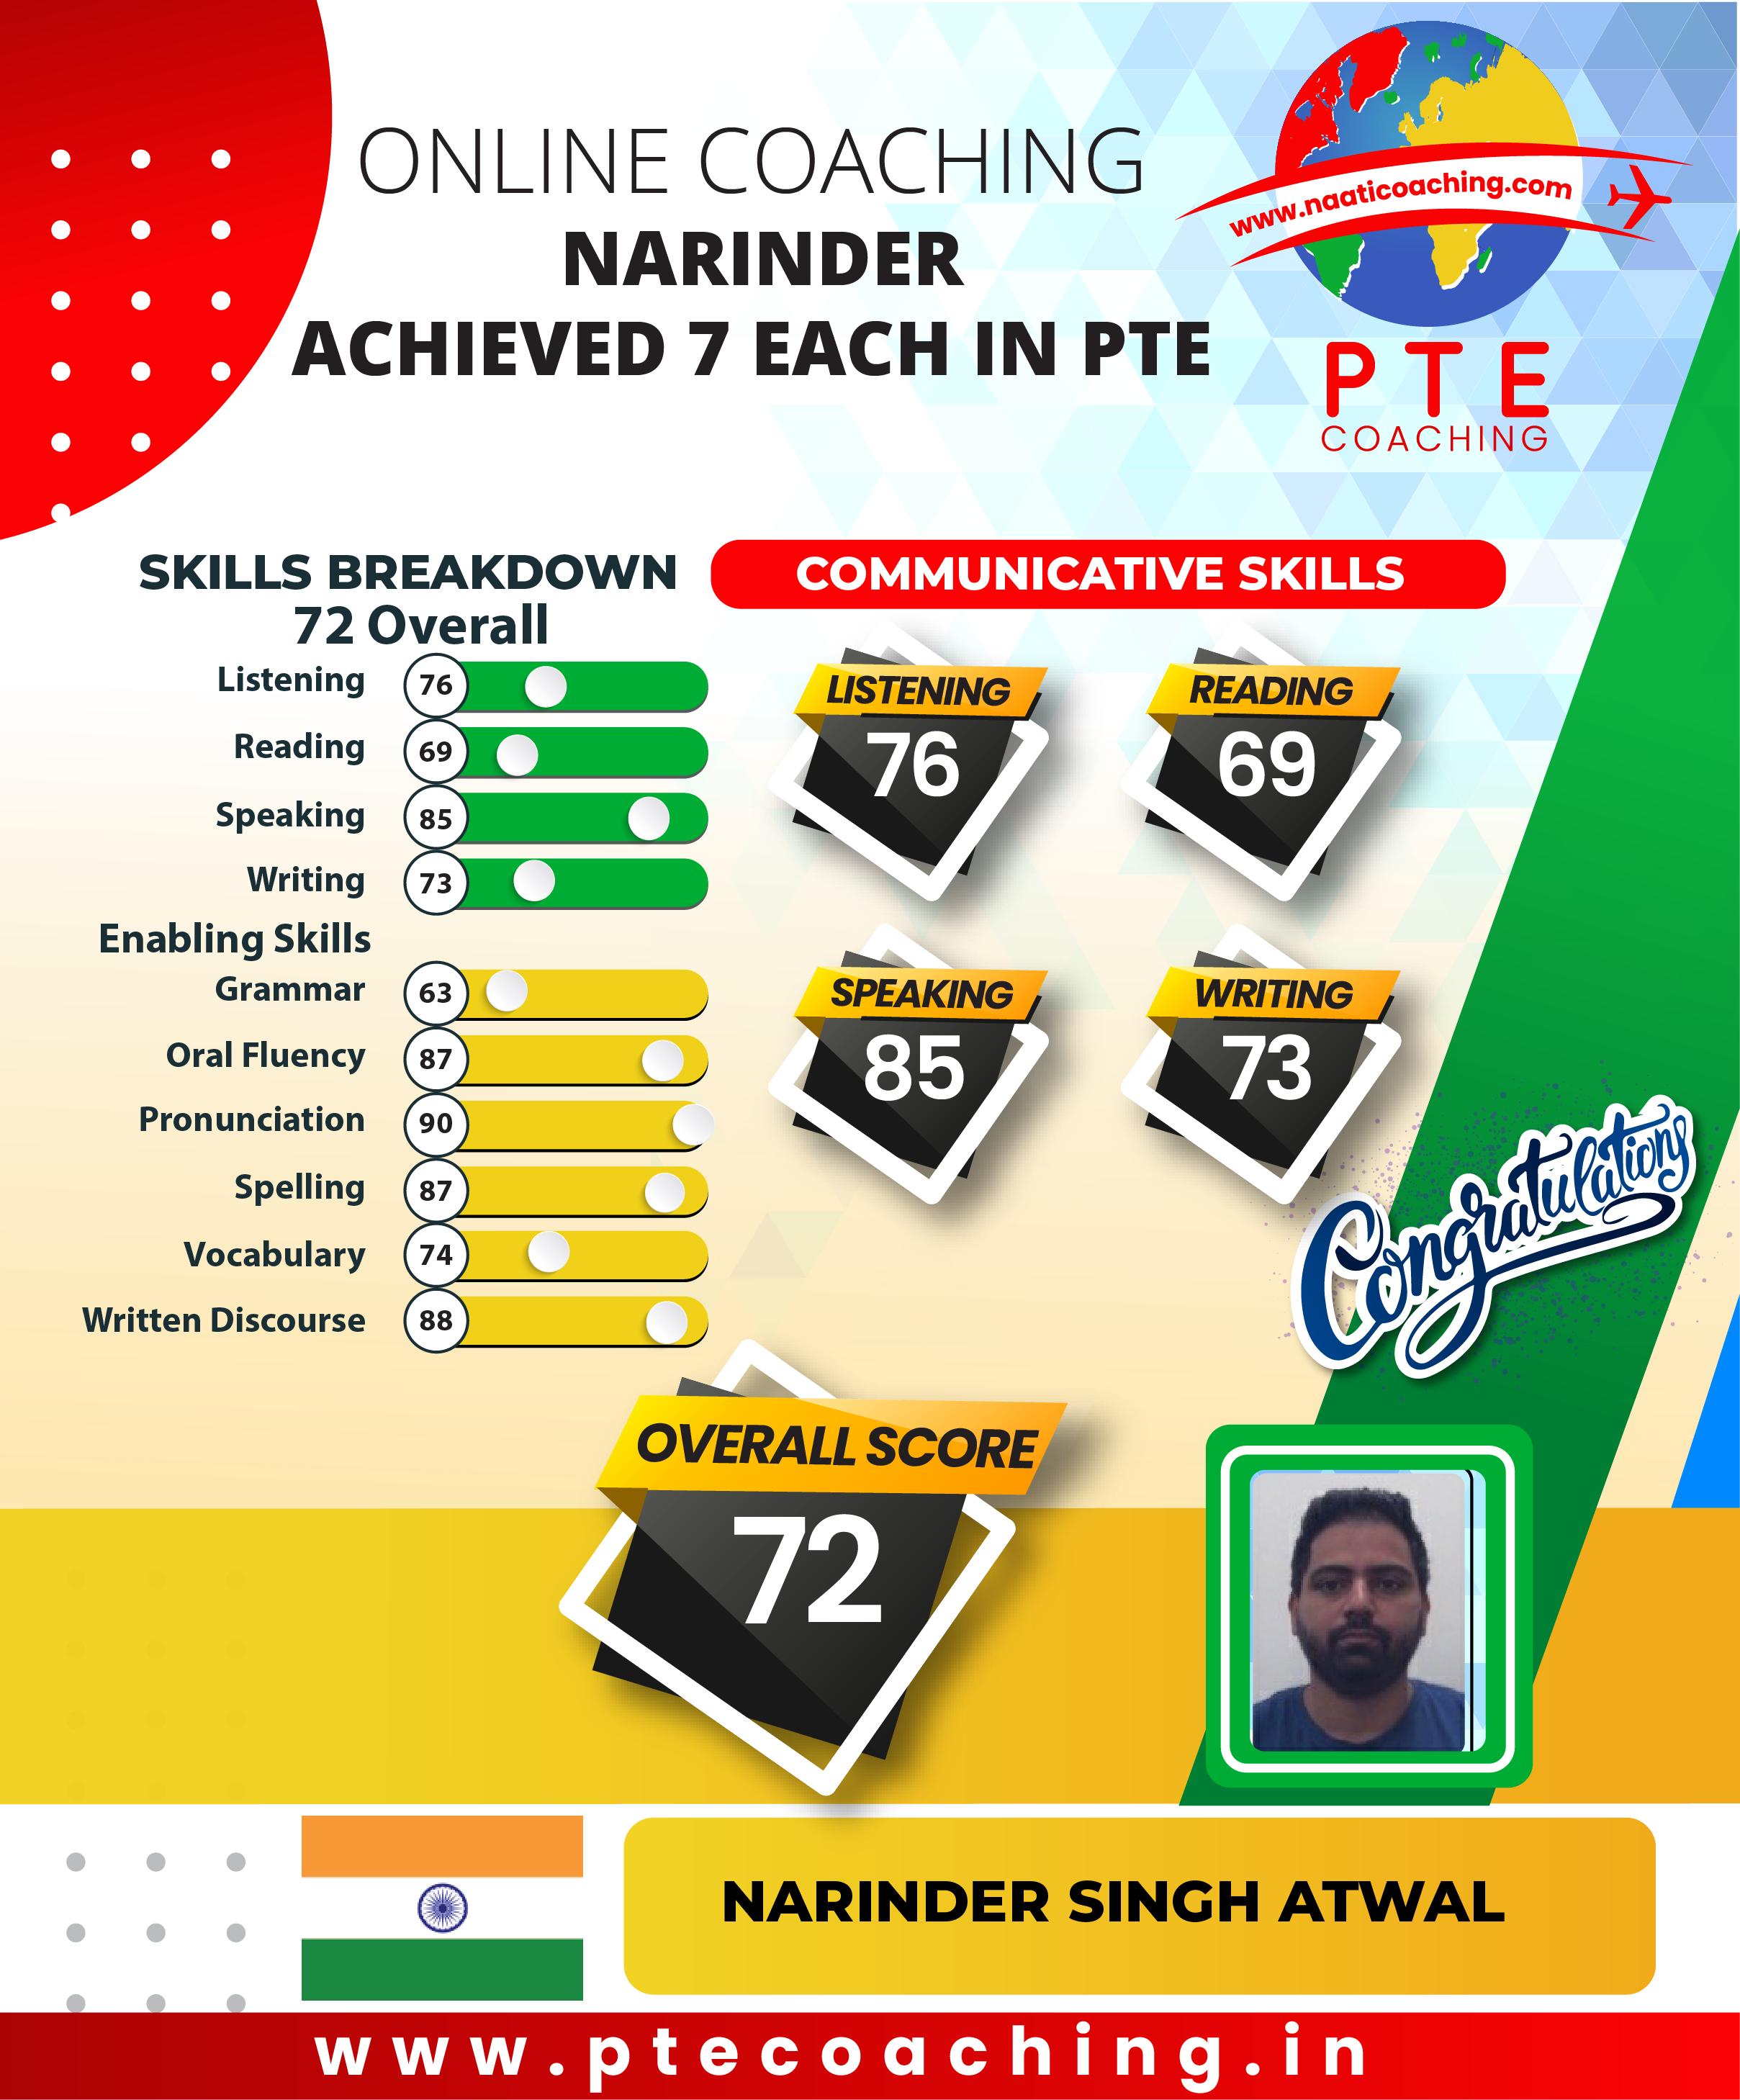 PTE Coaching Scorecard - Narinder achieved 7 each in PTE